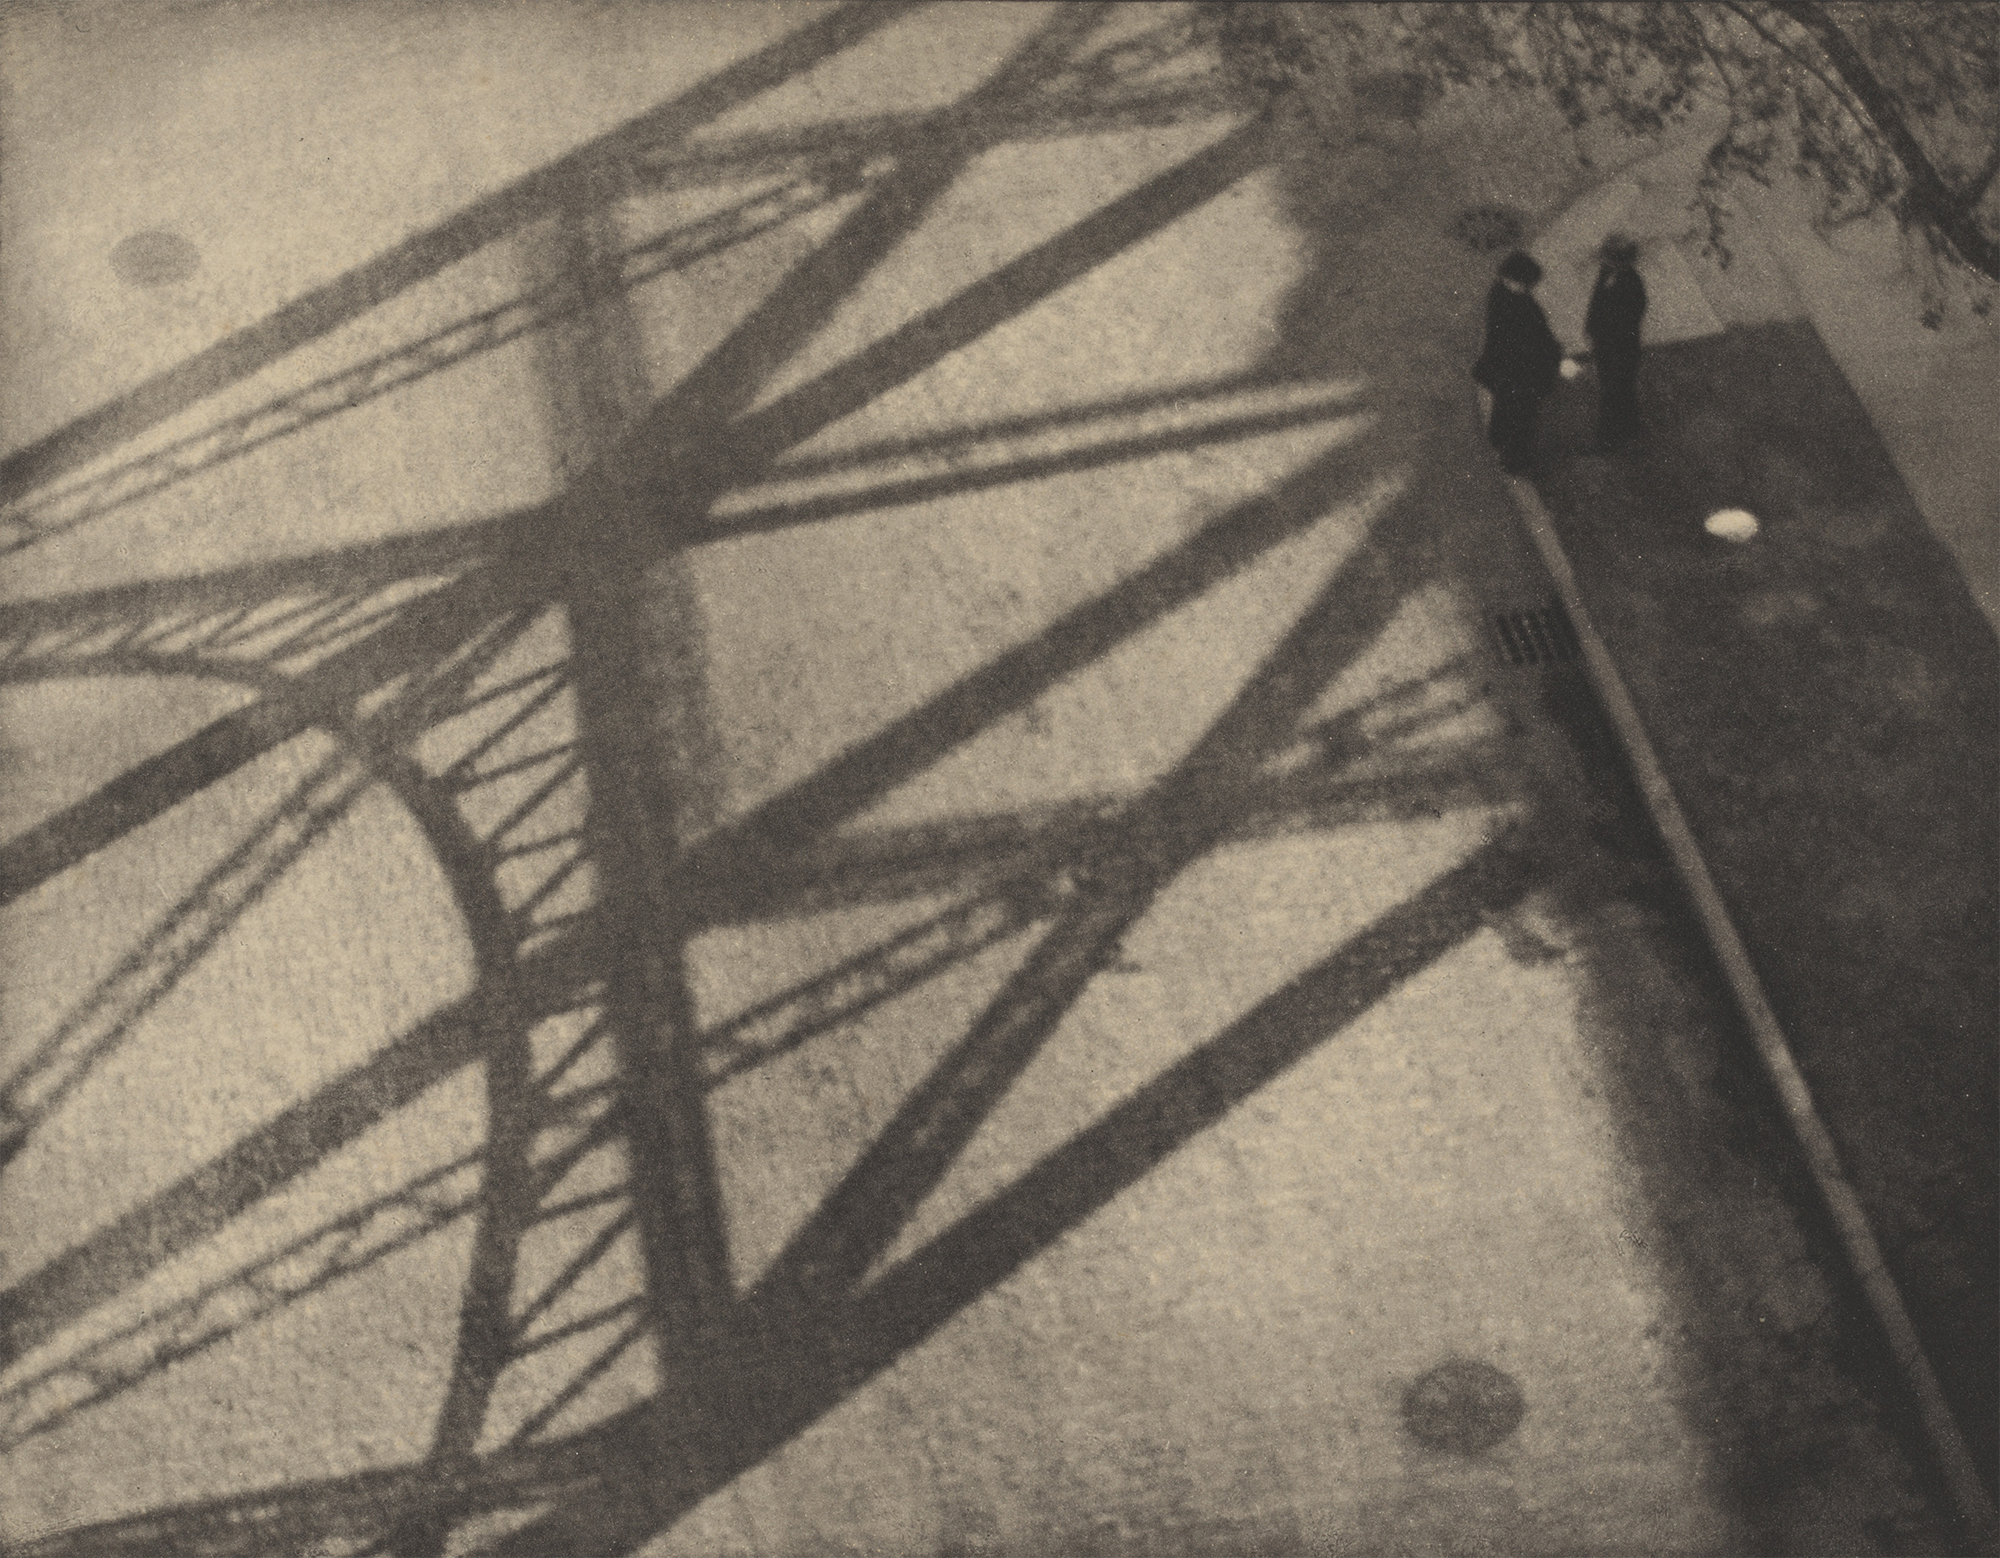 Paul Strand, The Viaduct, 125th Street, New York, 1915, Photogravure